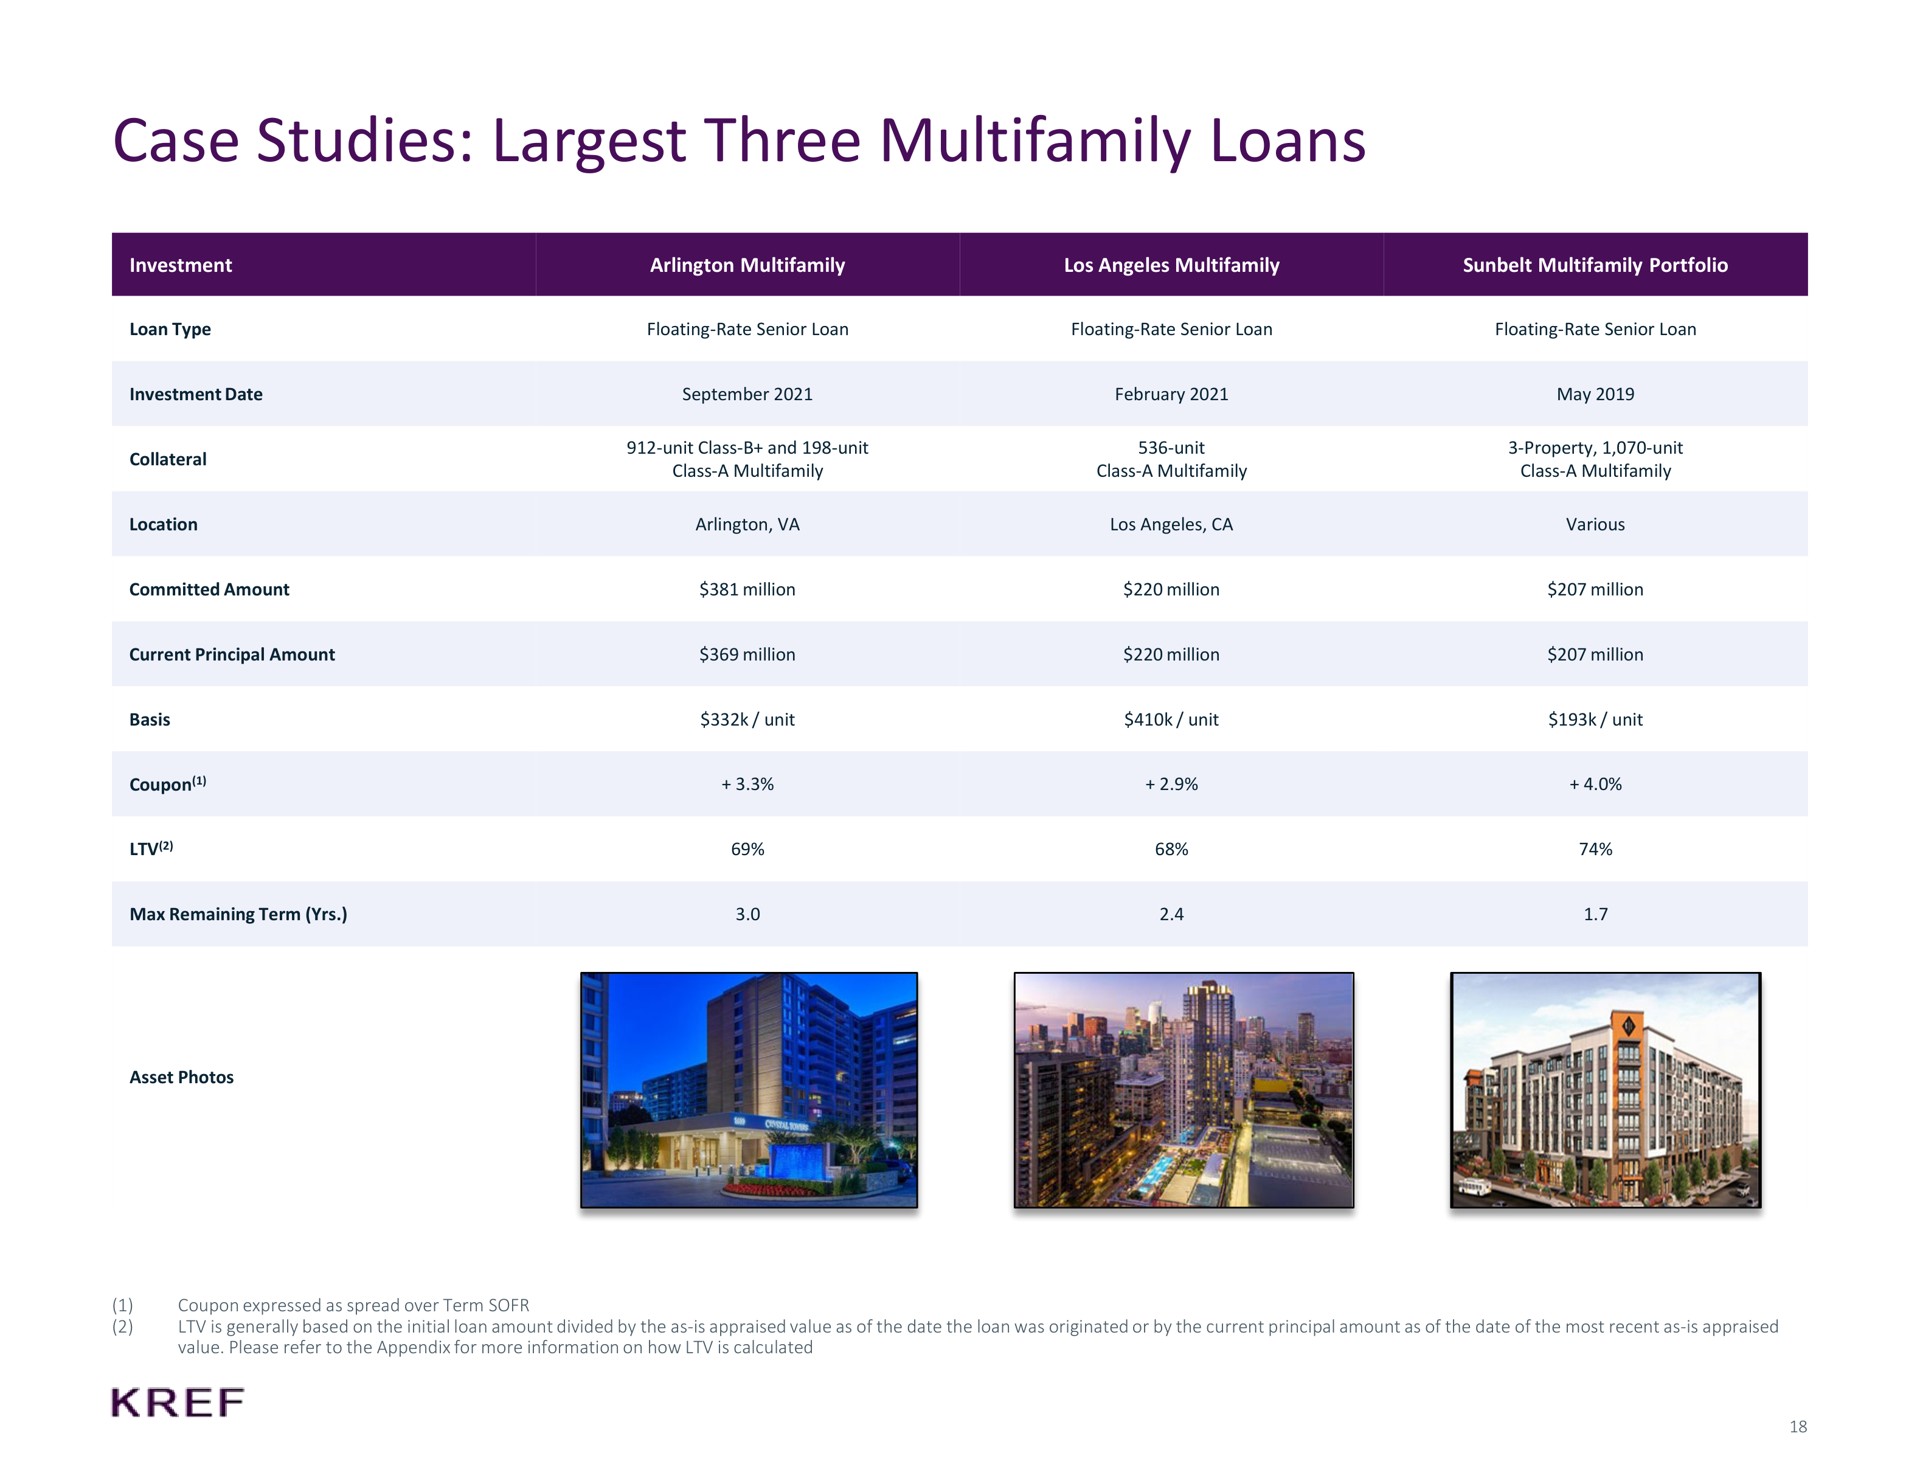 case studies three loans | KKR Real Estate Finance Trust